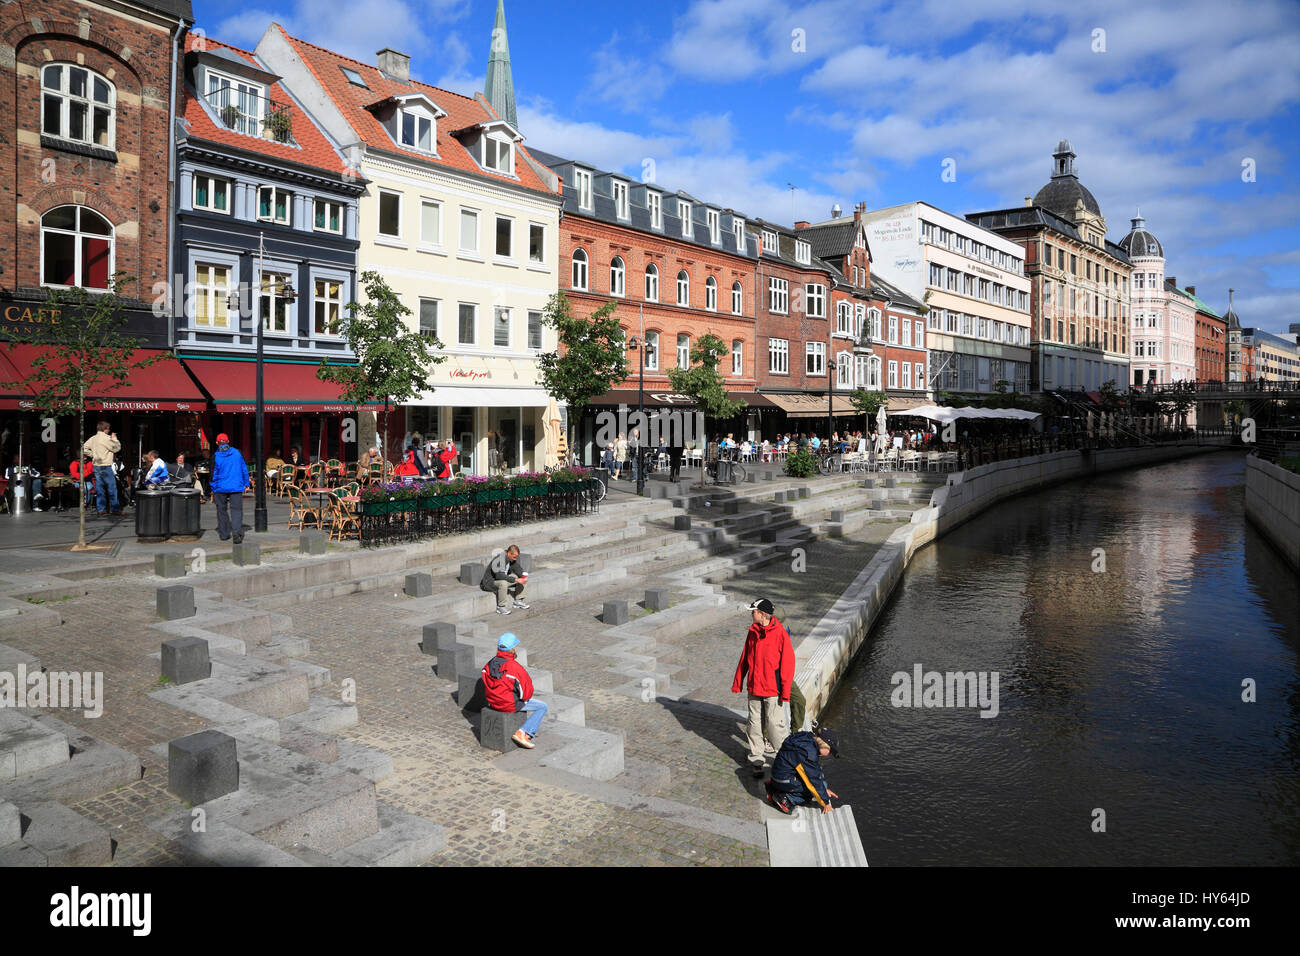 Square at Aboulevarden, Aarhus, Denmark, Scandinavia Stock Photo